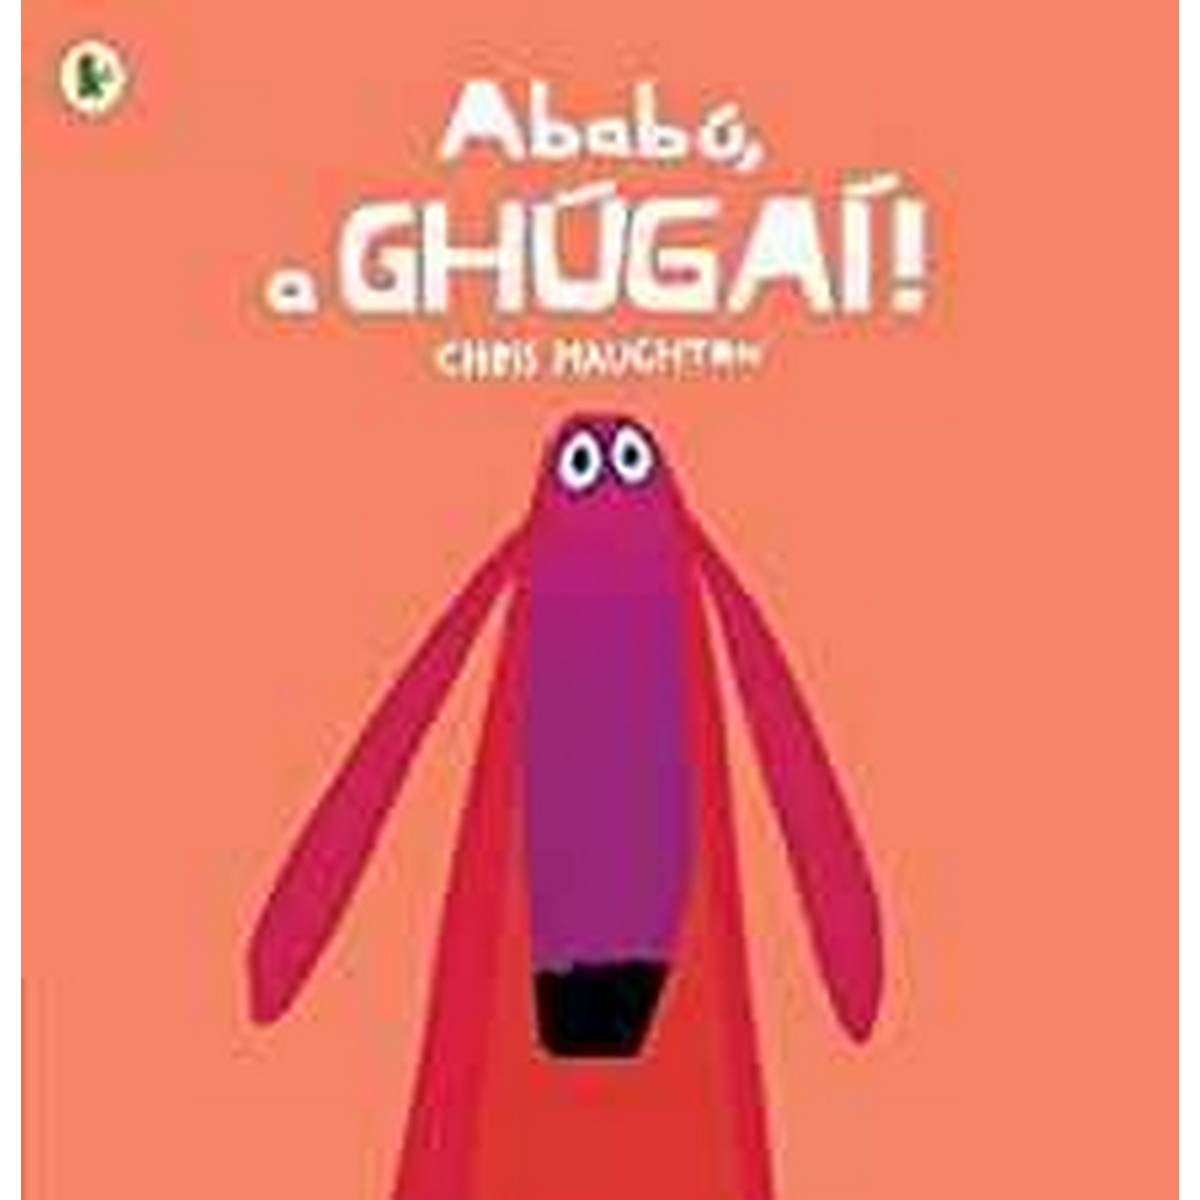 Ababu, a Ghhugai Oh No, George!)